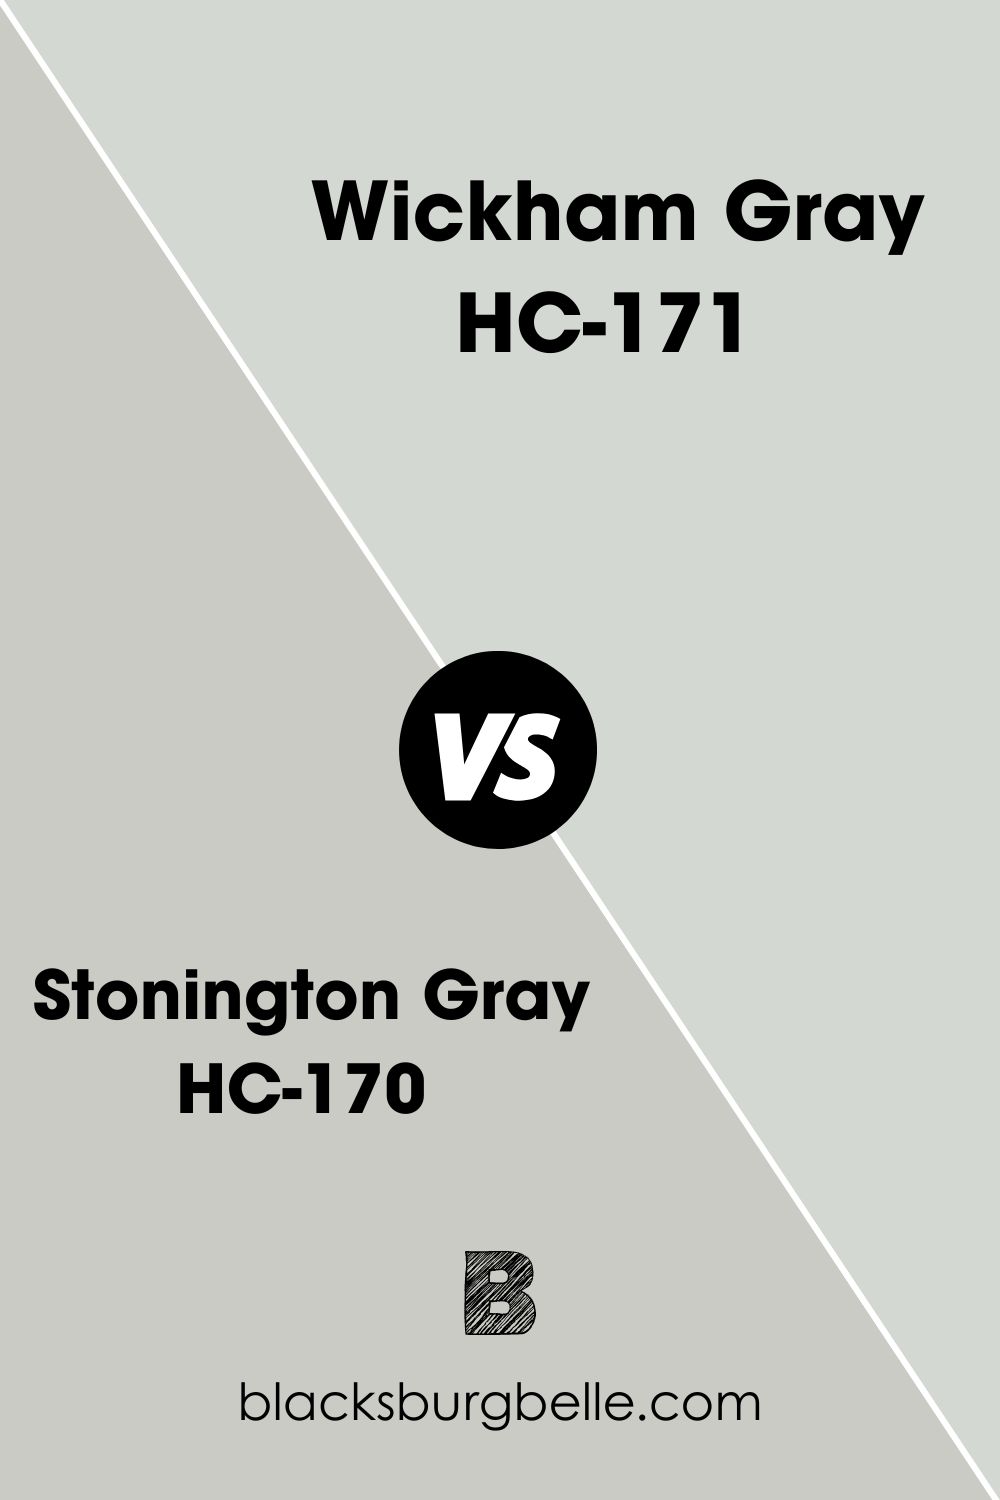 Stonington Gray HC-170